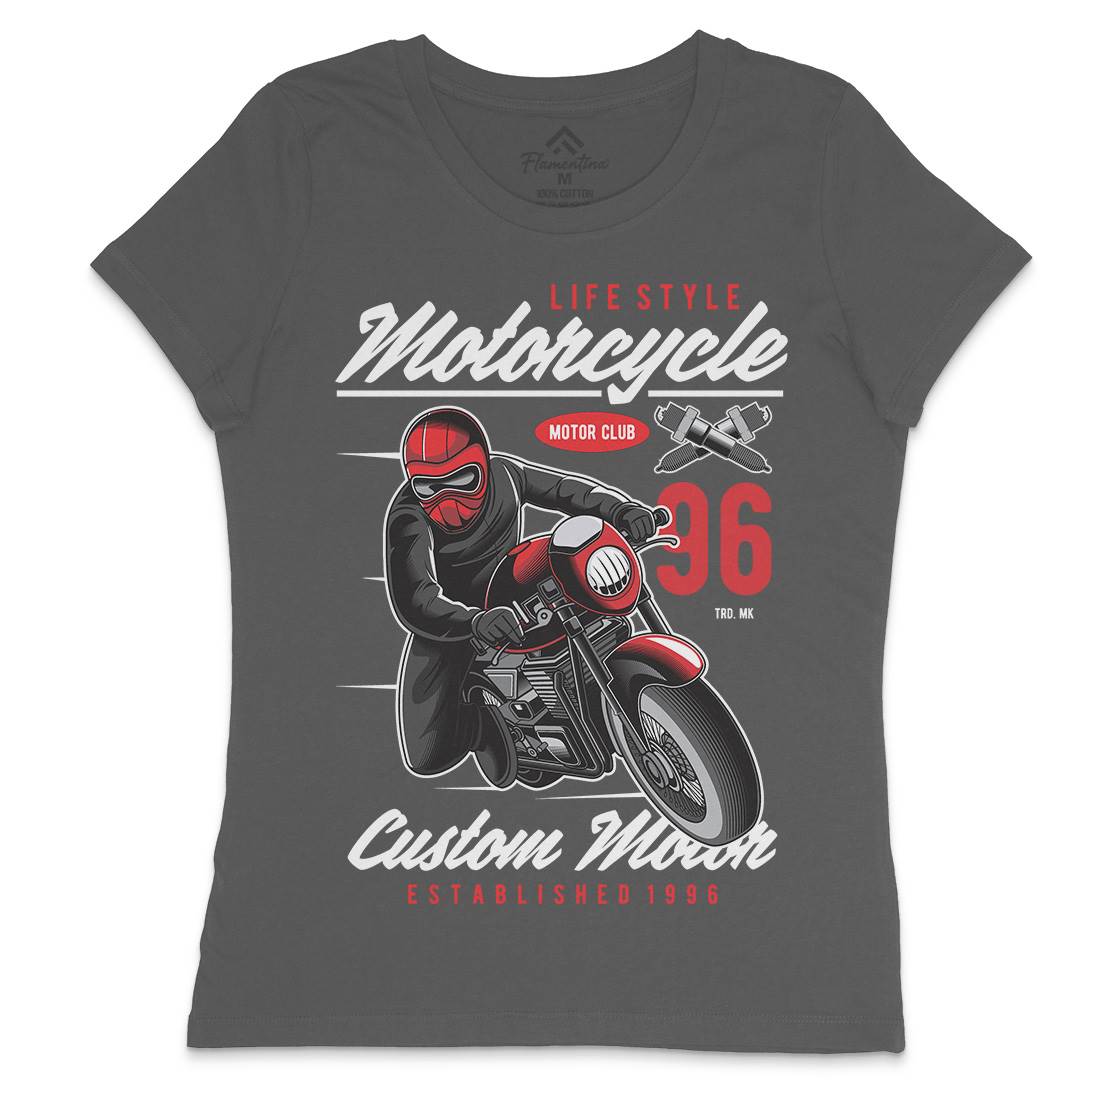 Lifestyle Womens Crew Neck T-Shirt Motorcycles C399